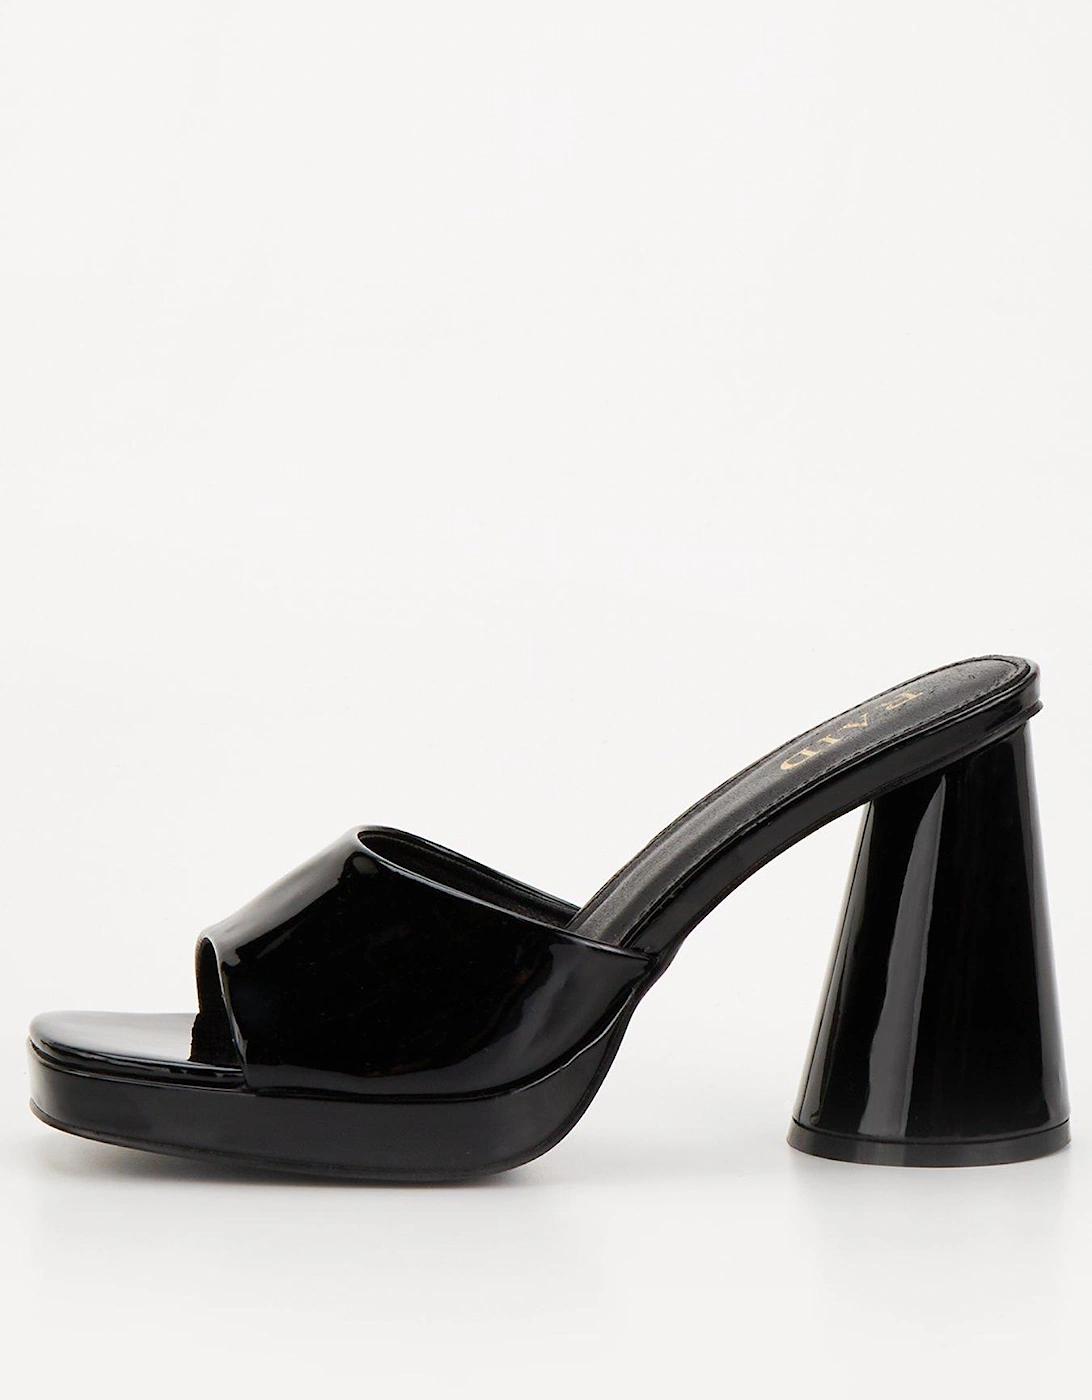 Kiko Heeled Platform Sandal - Black, 7 of 6